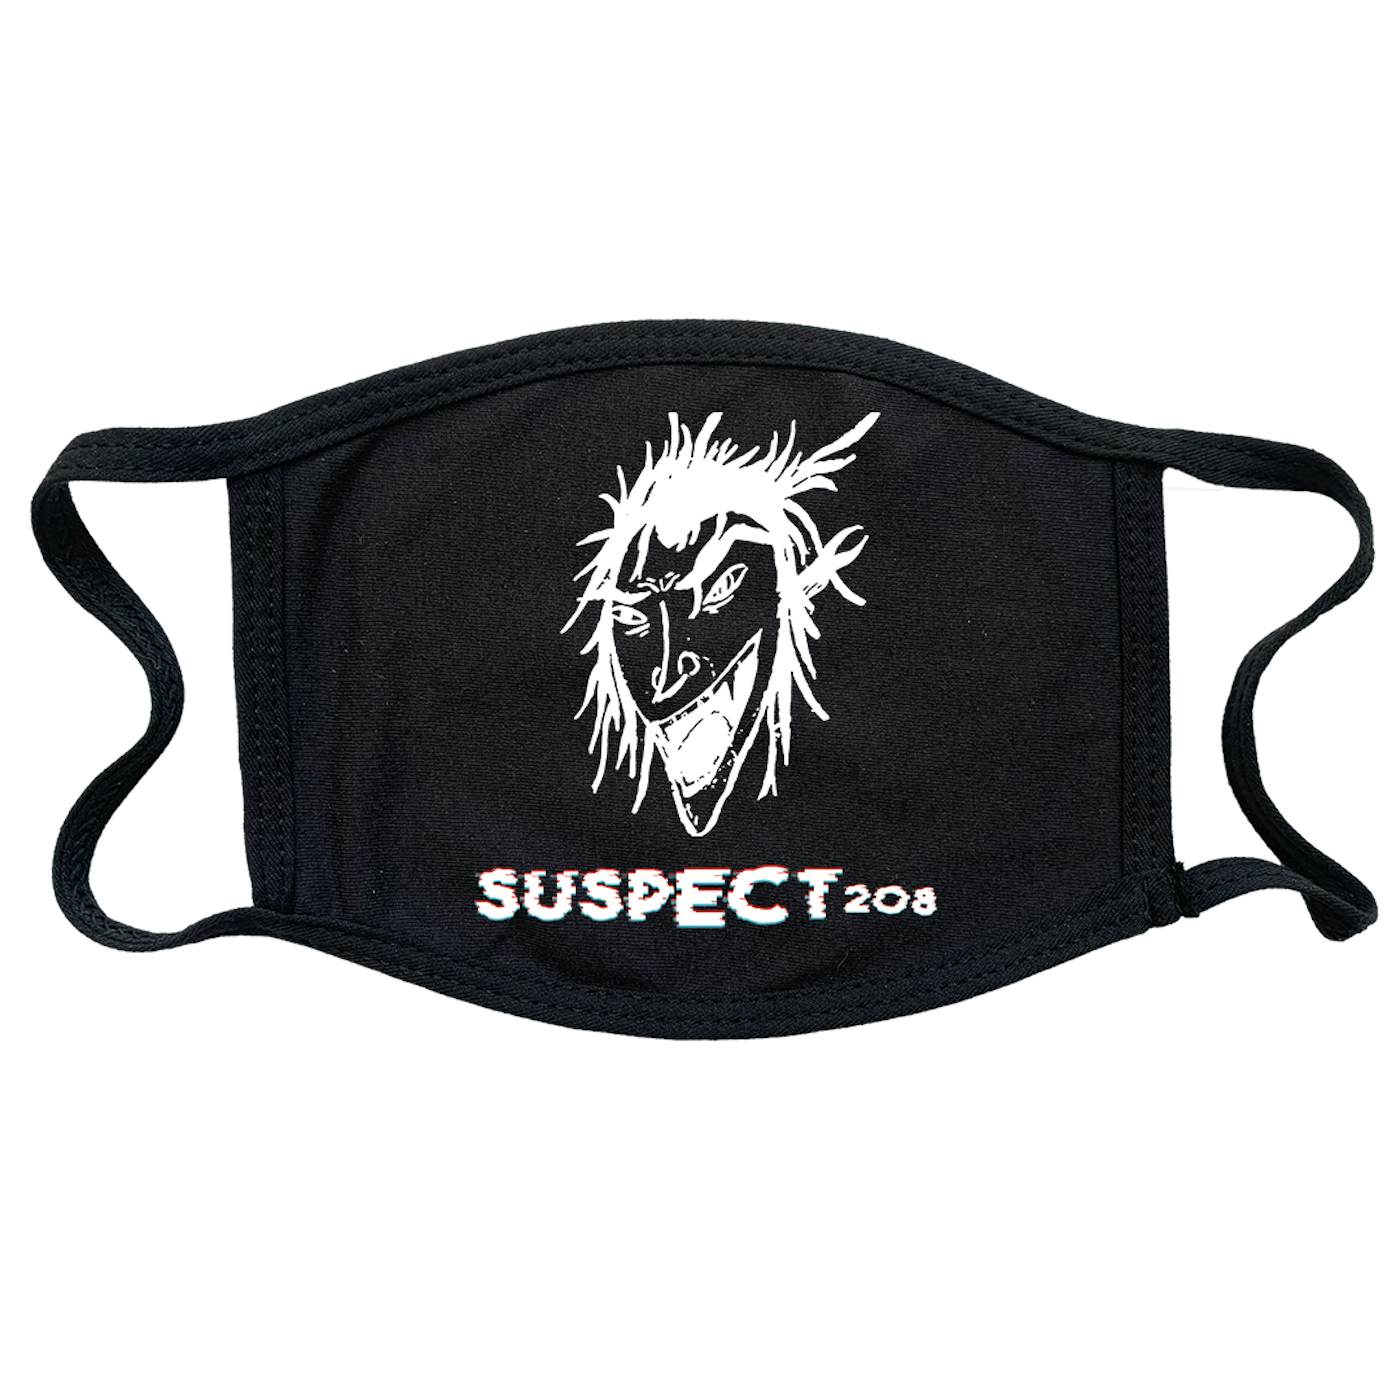 Suspect208 Suspect 208 "Vampire" Face Mask